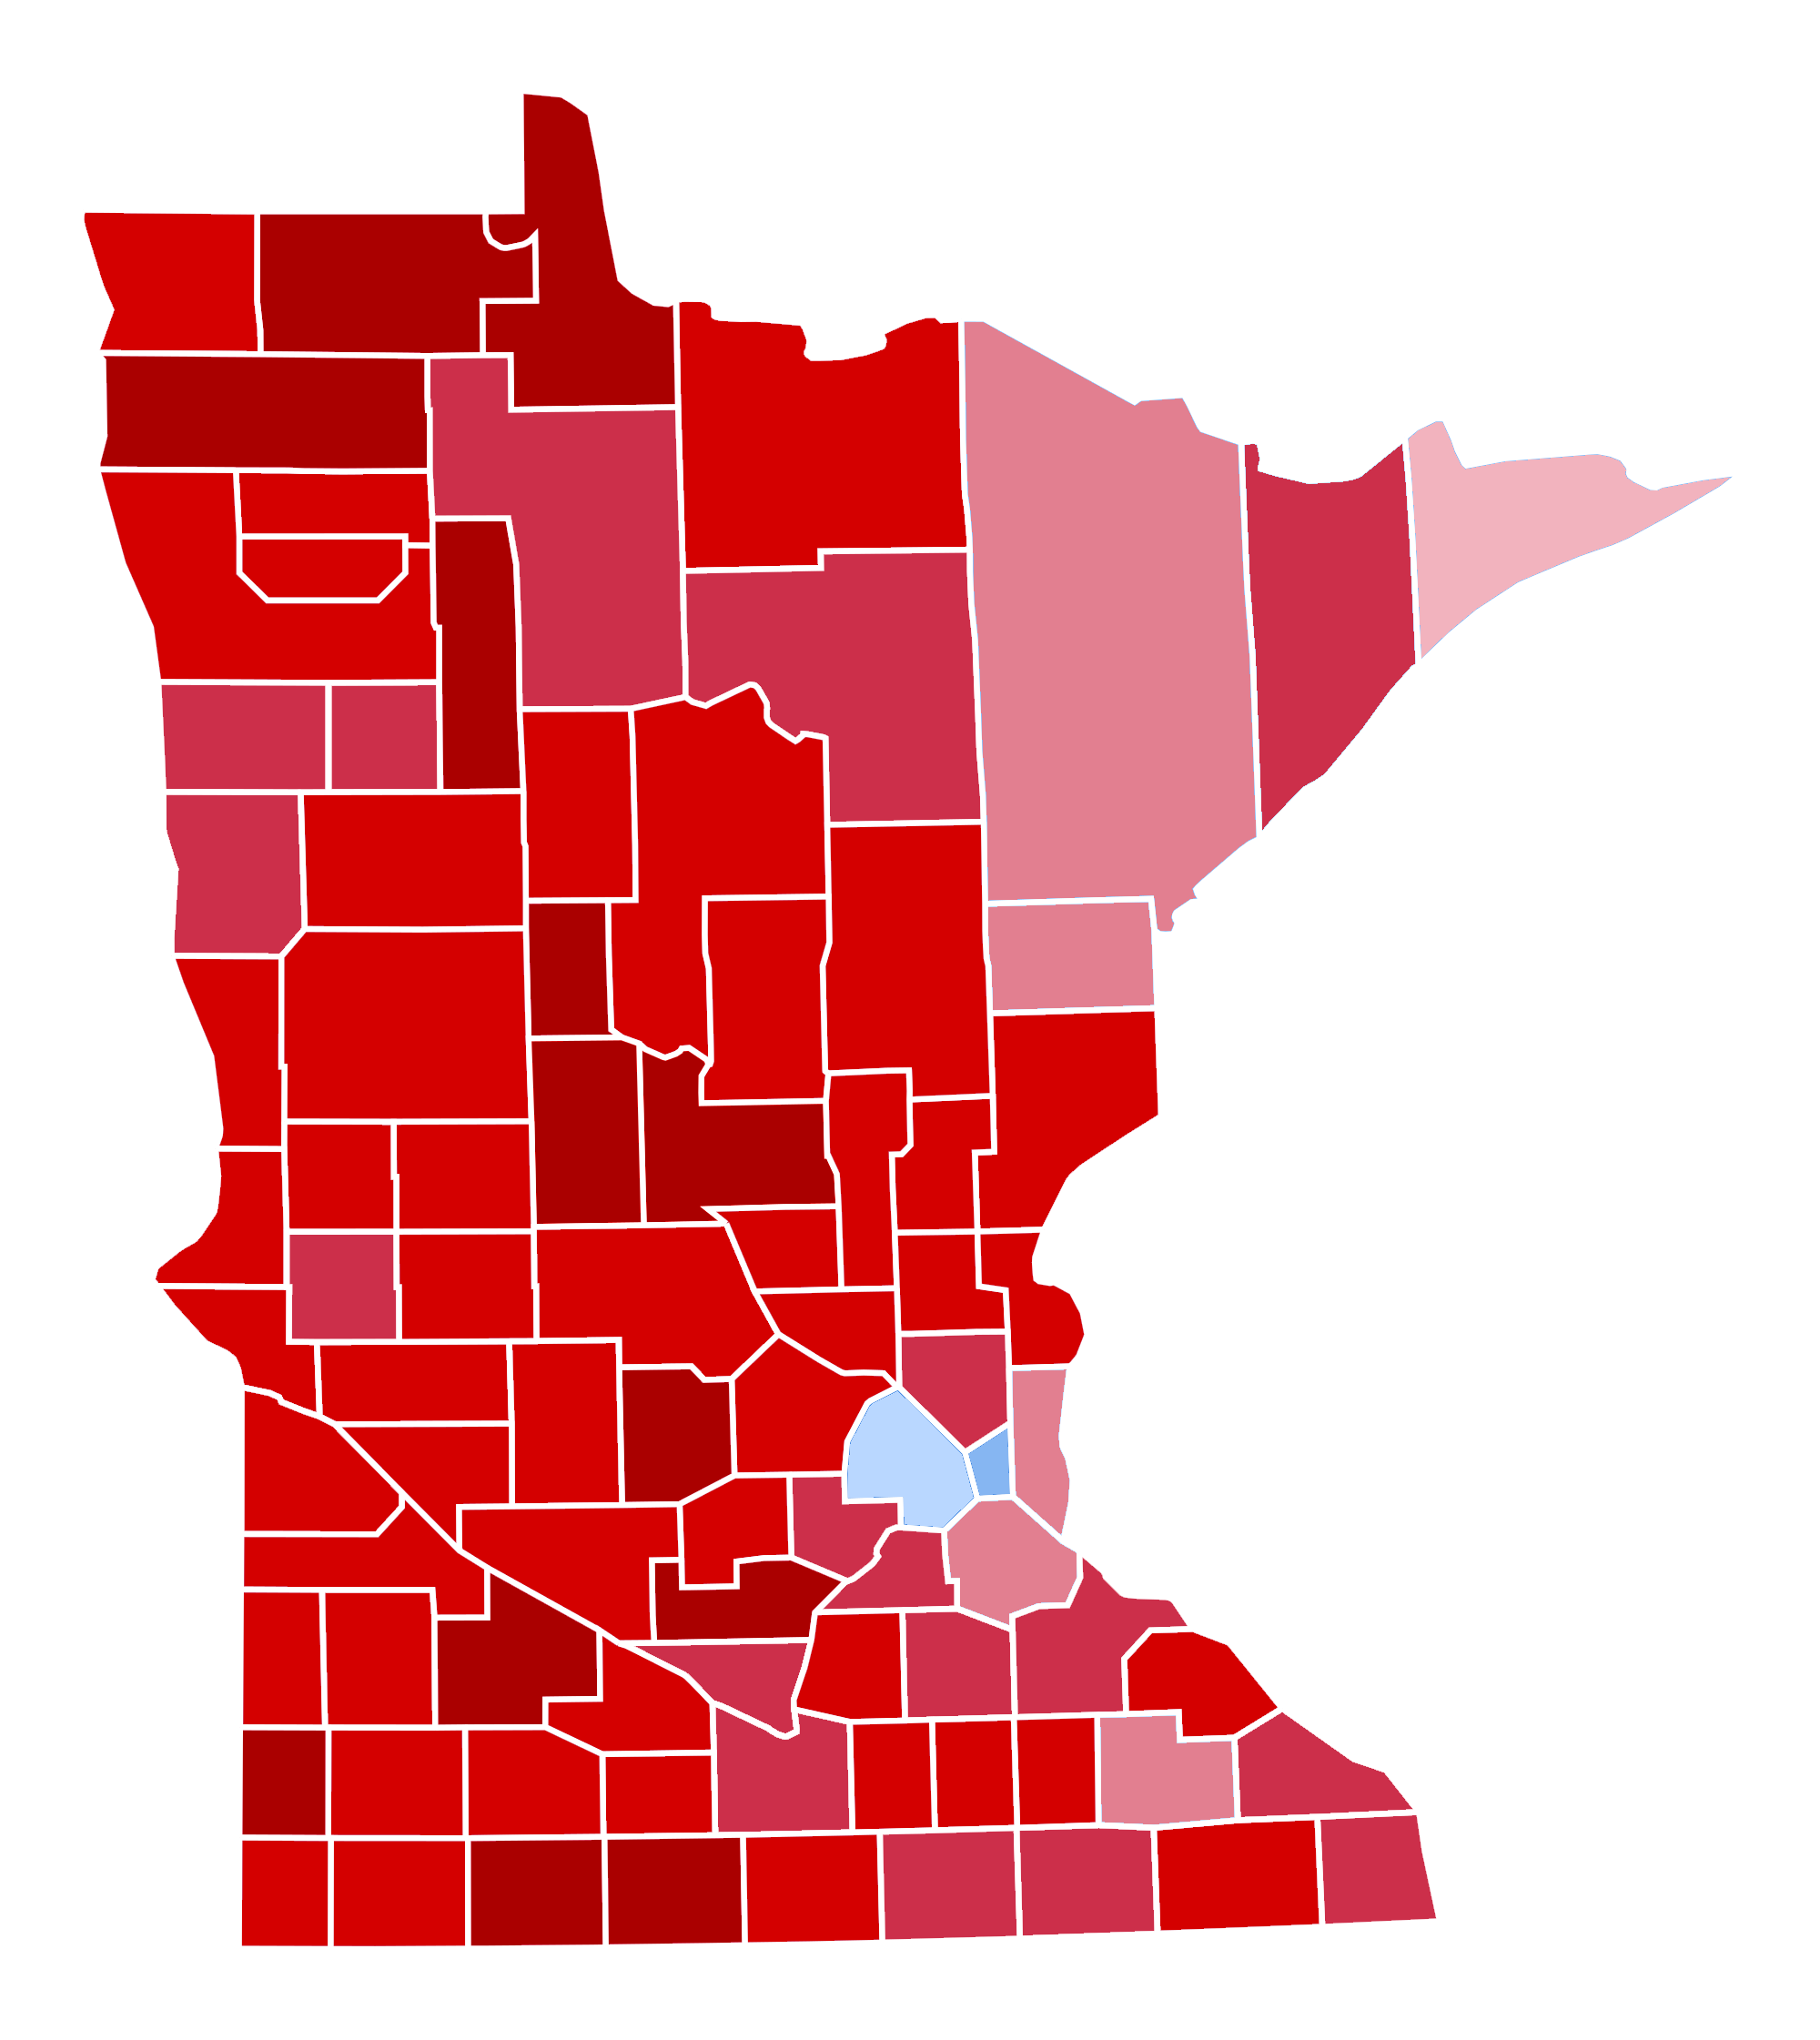 2000px-Minnesota_Presidential_Election_Results_2016_Republican_Landslide_15.06%.png